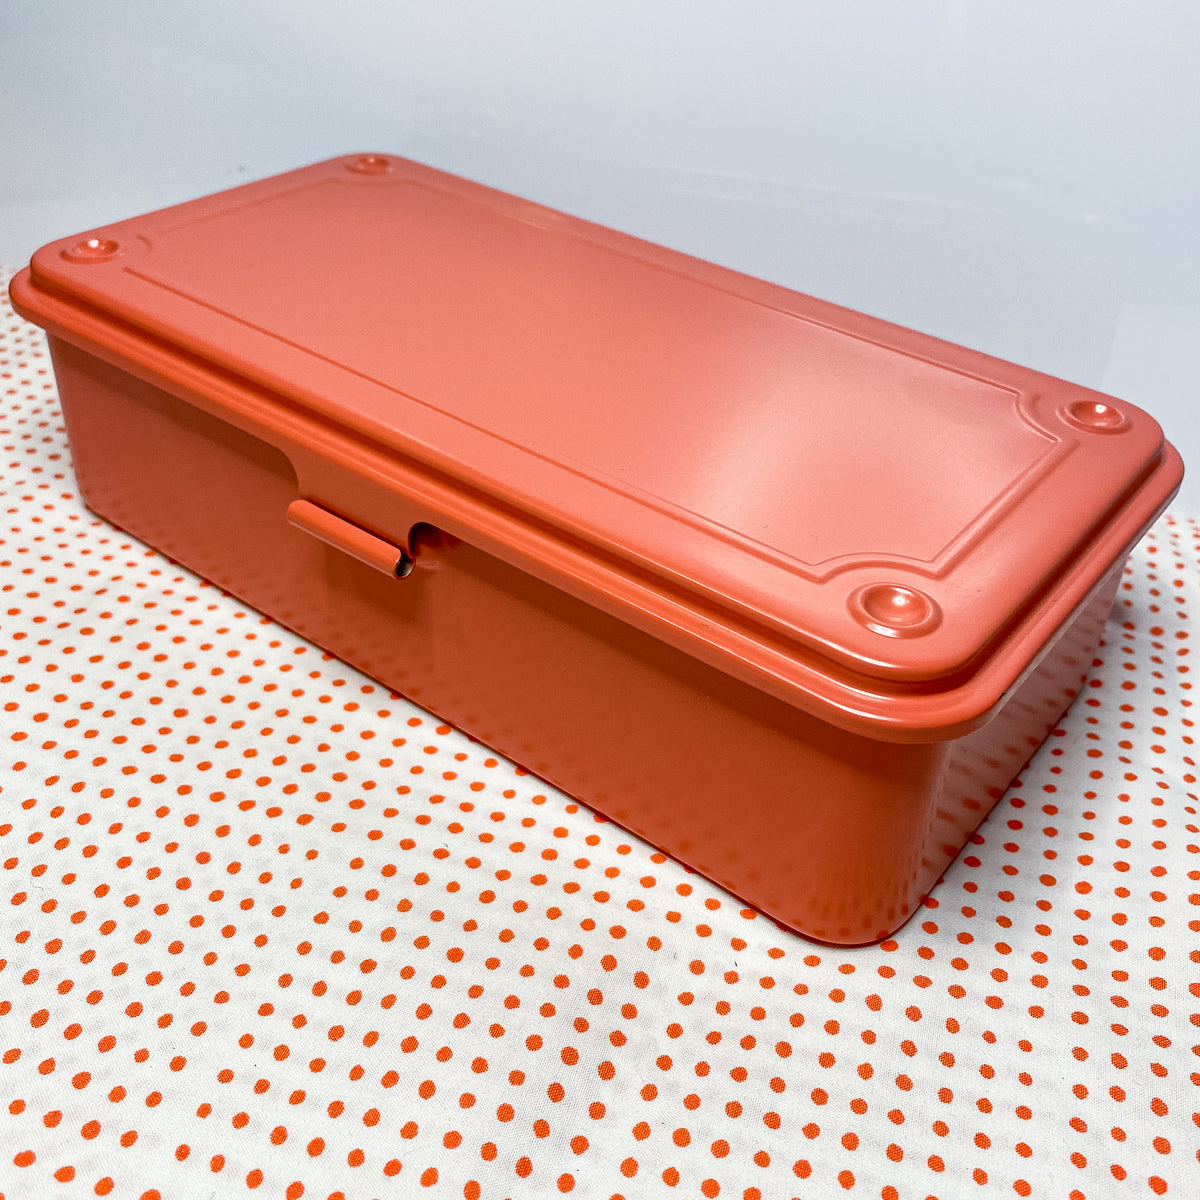 Toyo Steel Metal Tool Box (Live Coral) Grab Box - Keller Design Co.